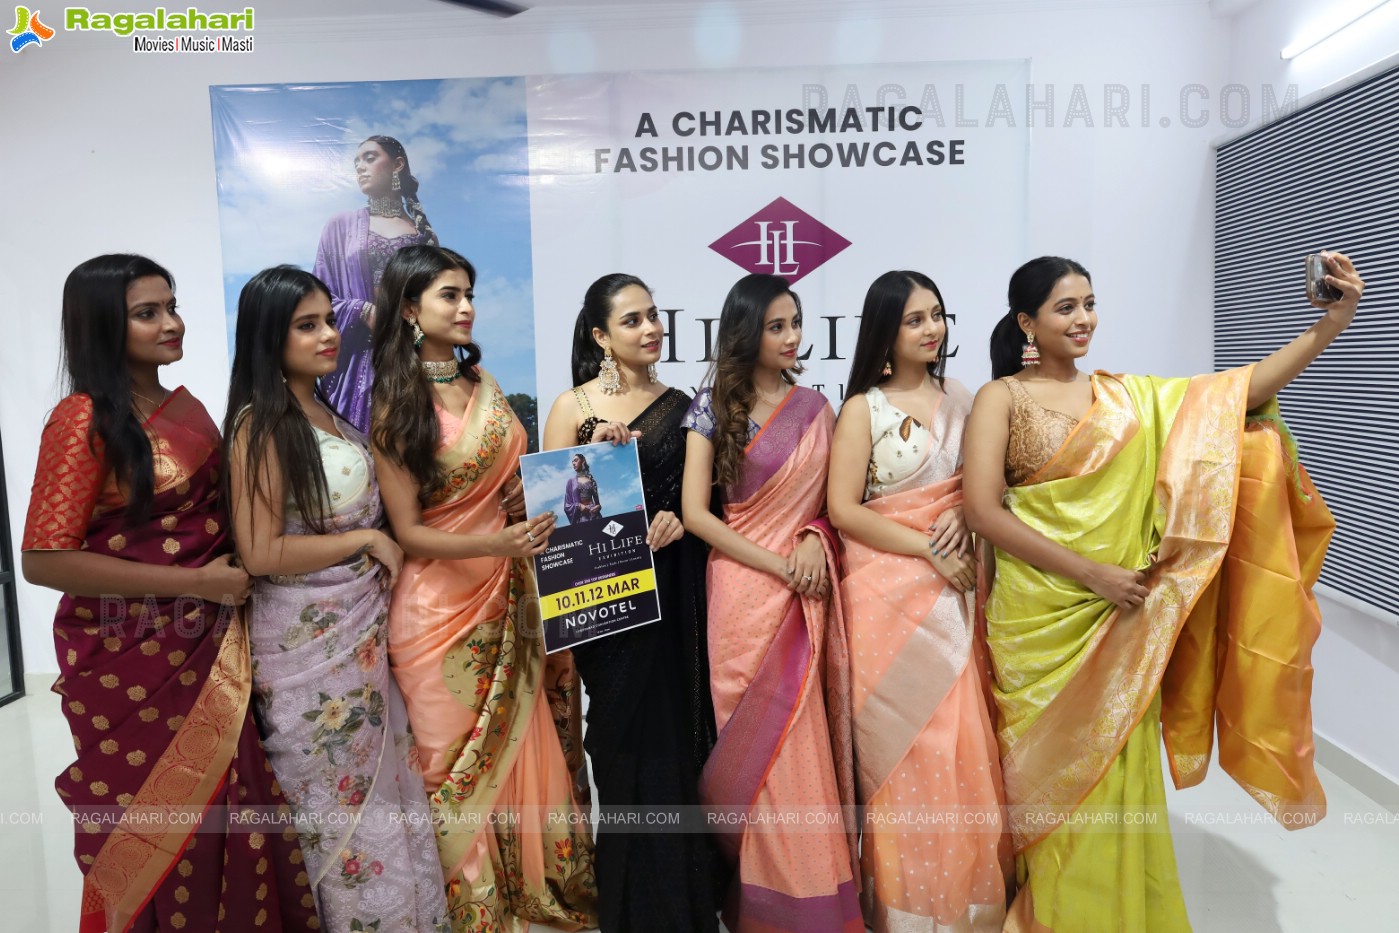 Hi Life Exhibition March 2023 Grand Fashion Showcase, Hyderabad